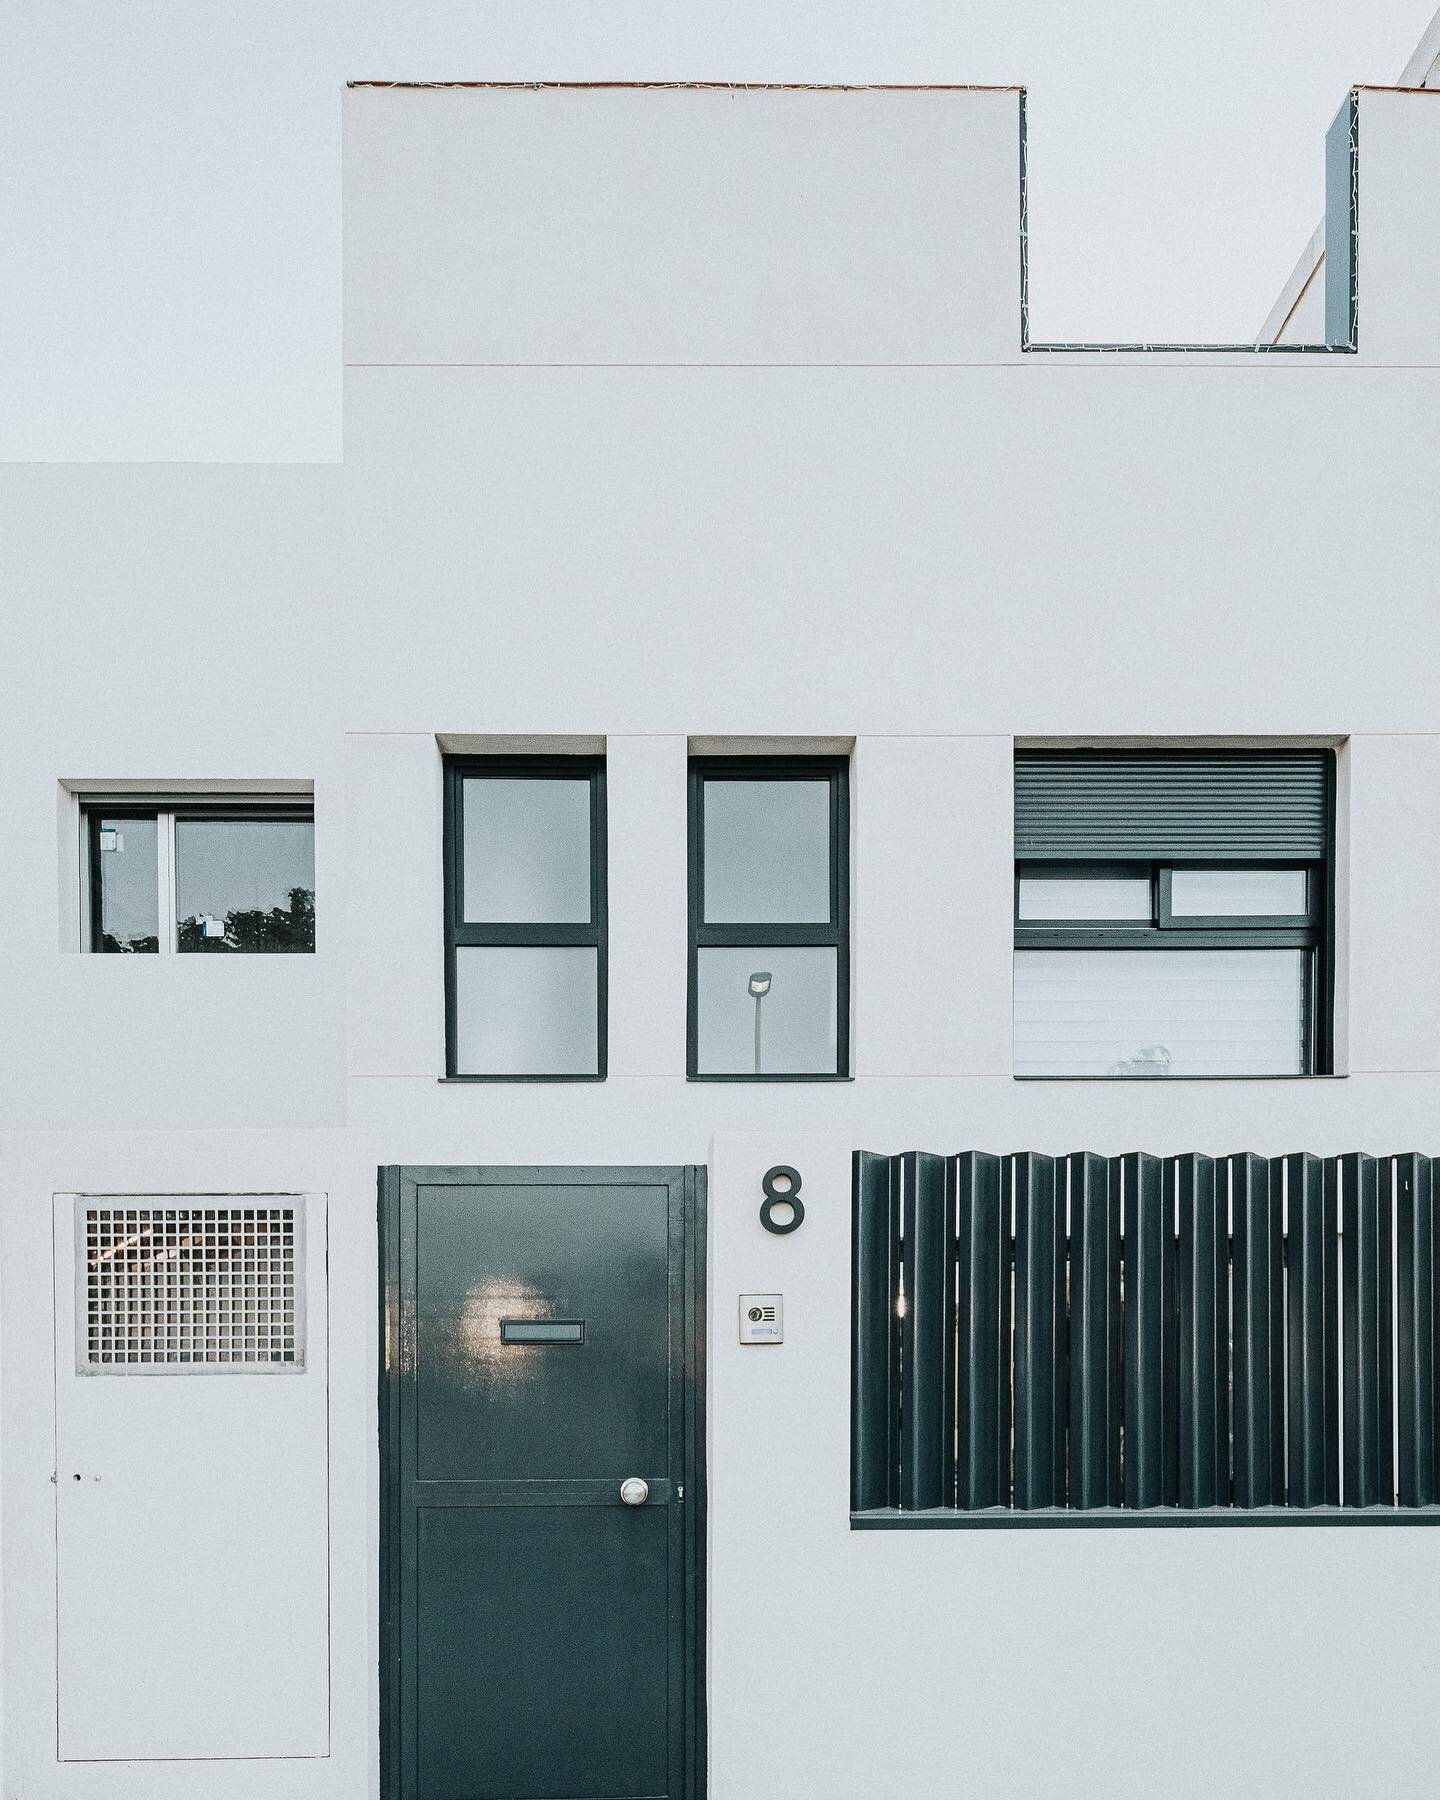 Blanco y negro
-
#architecture #archilovers #fachadas #minimalism #archdaily #archilover #archidesign #home #paiporta #valencia #whitehouse